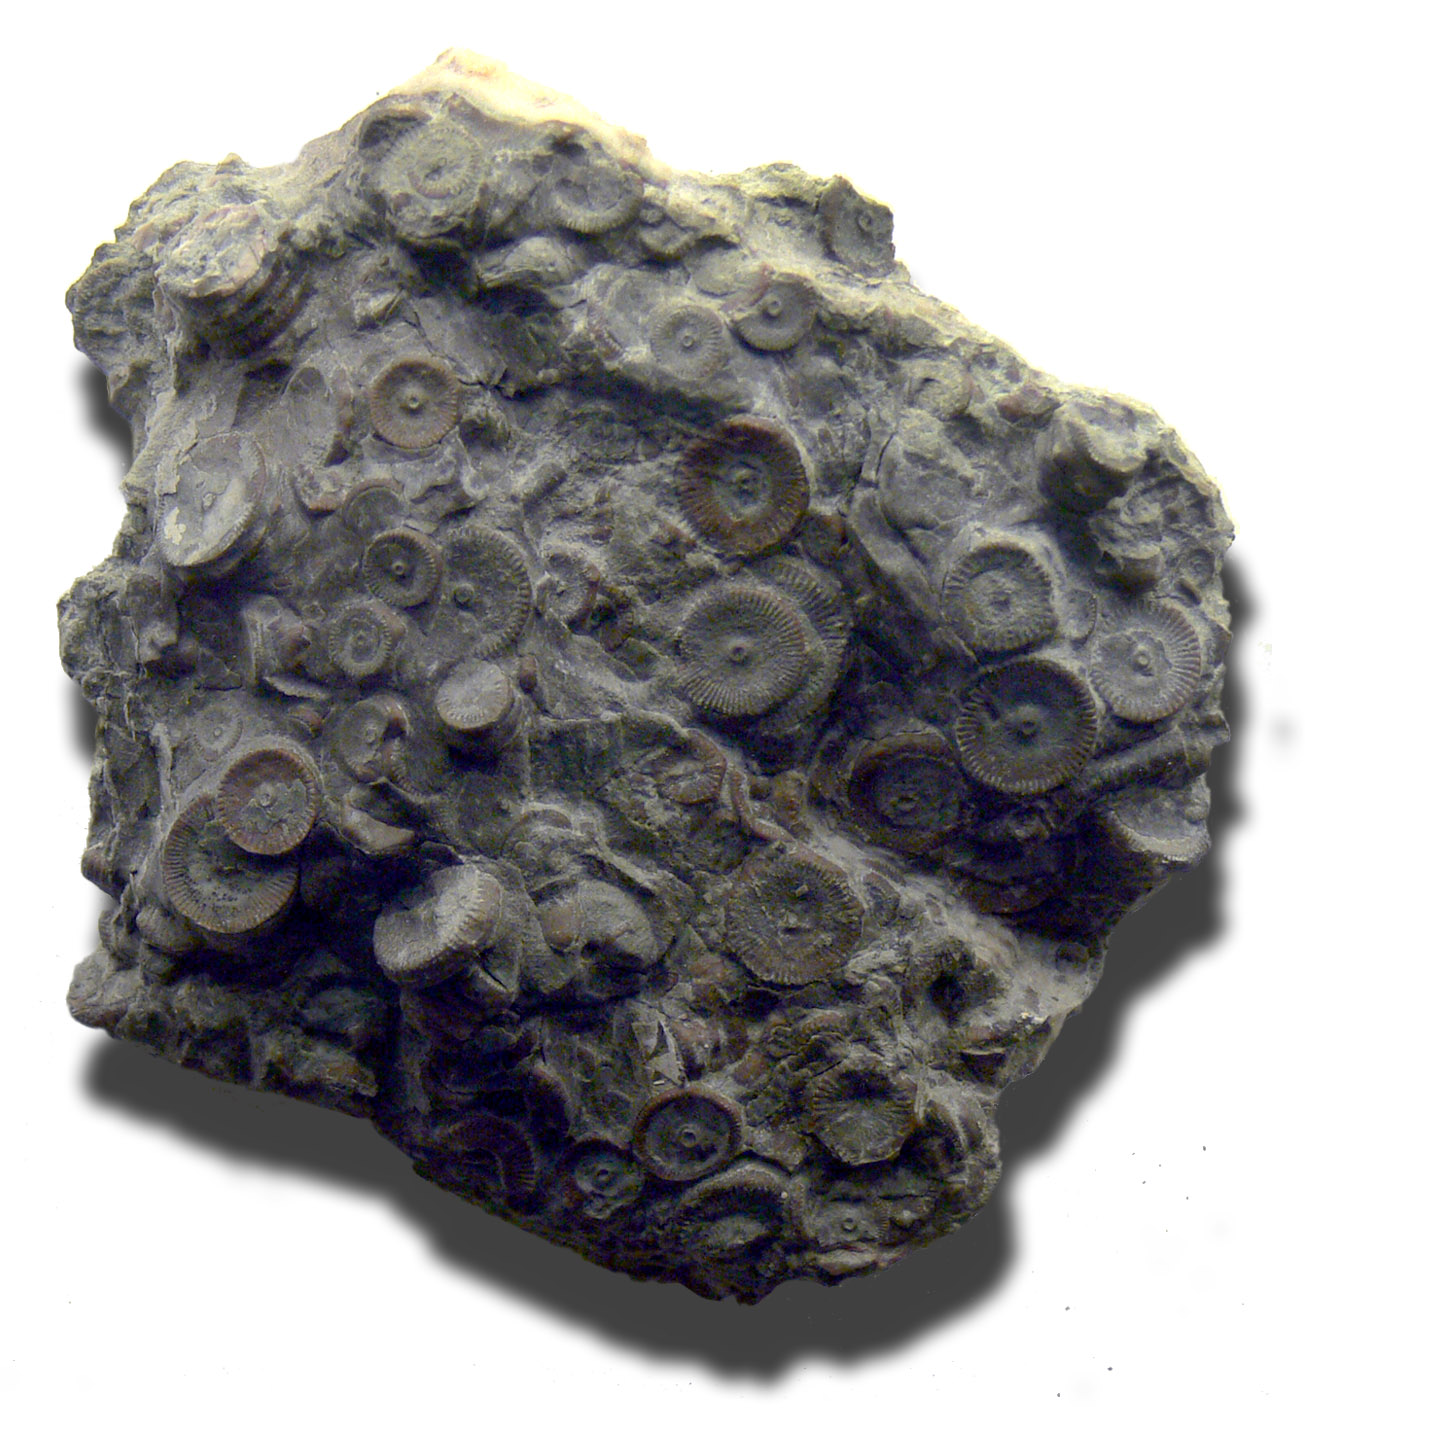 На Камчатке обнаружены механизмы возрастом 400 млн. лет